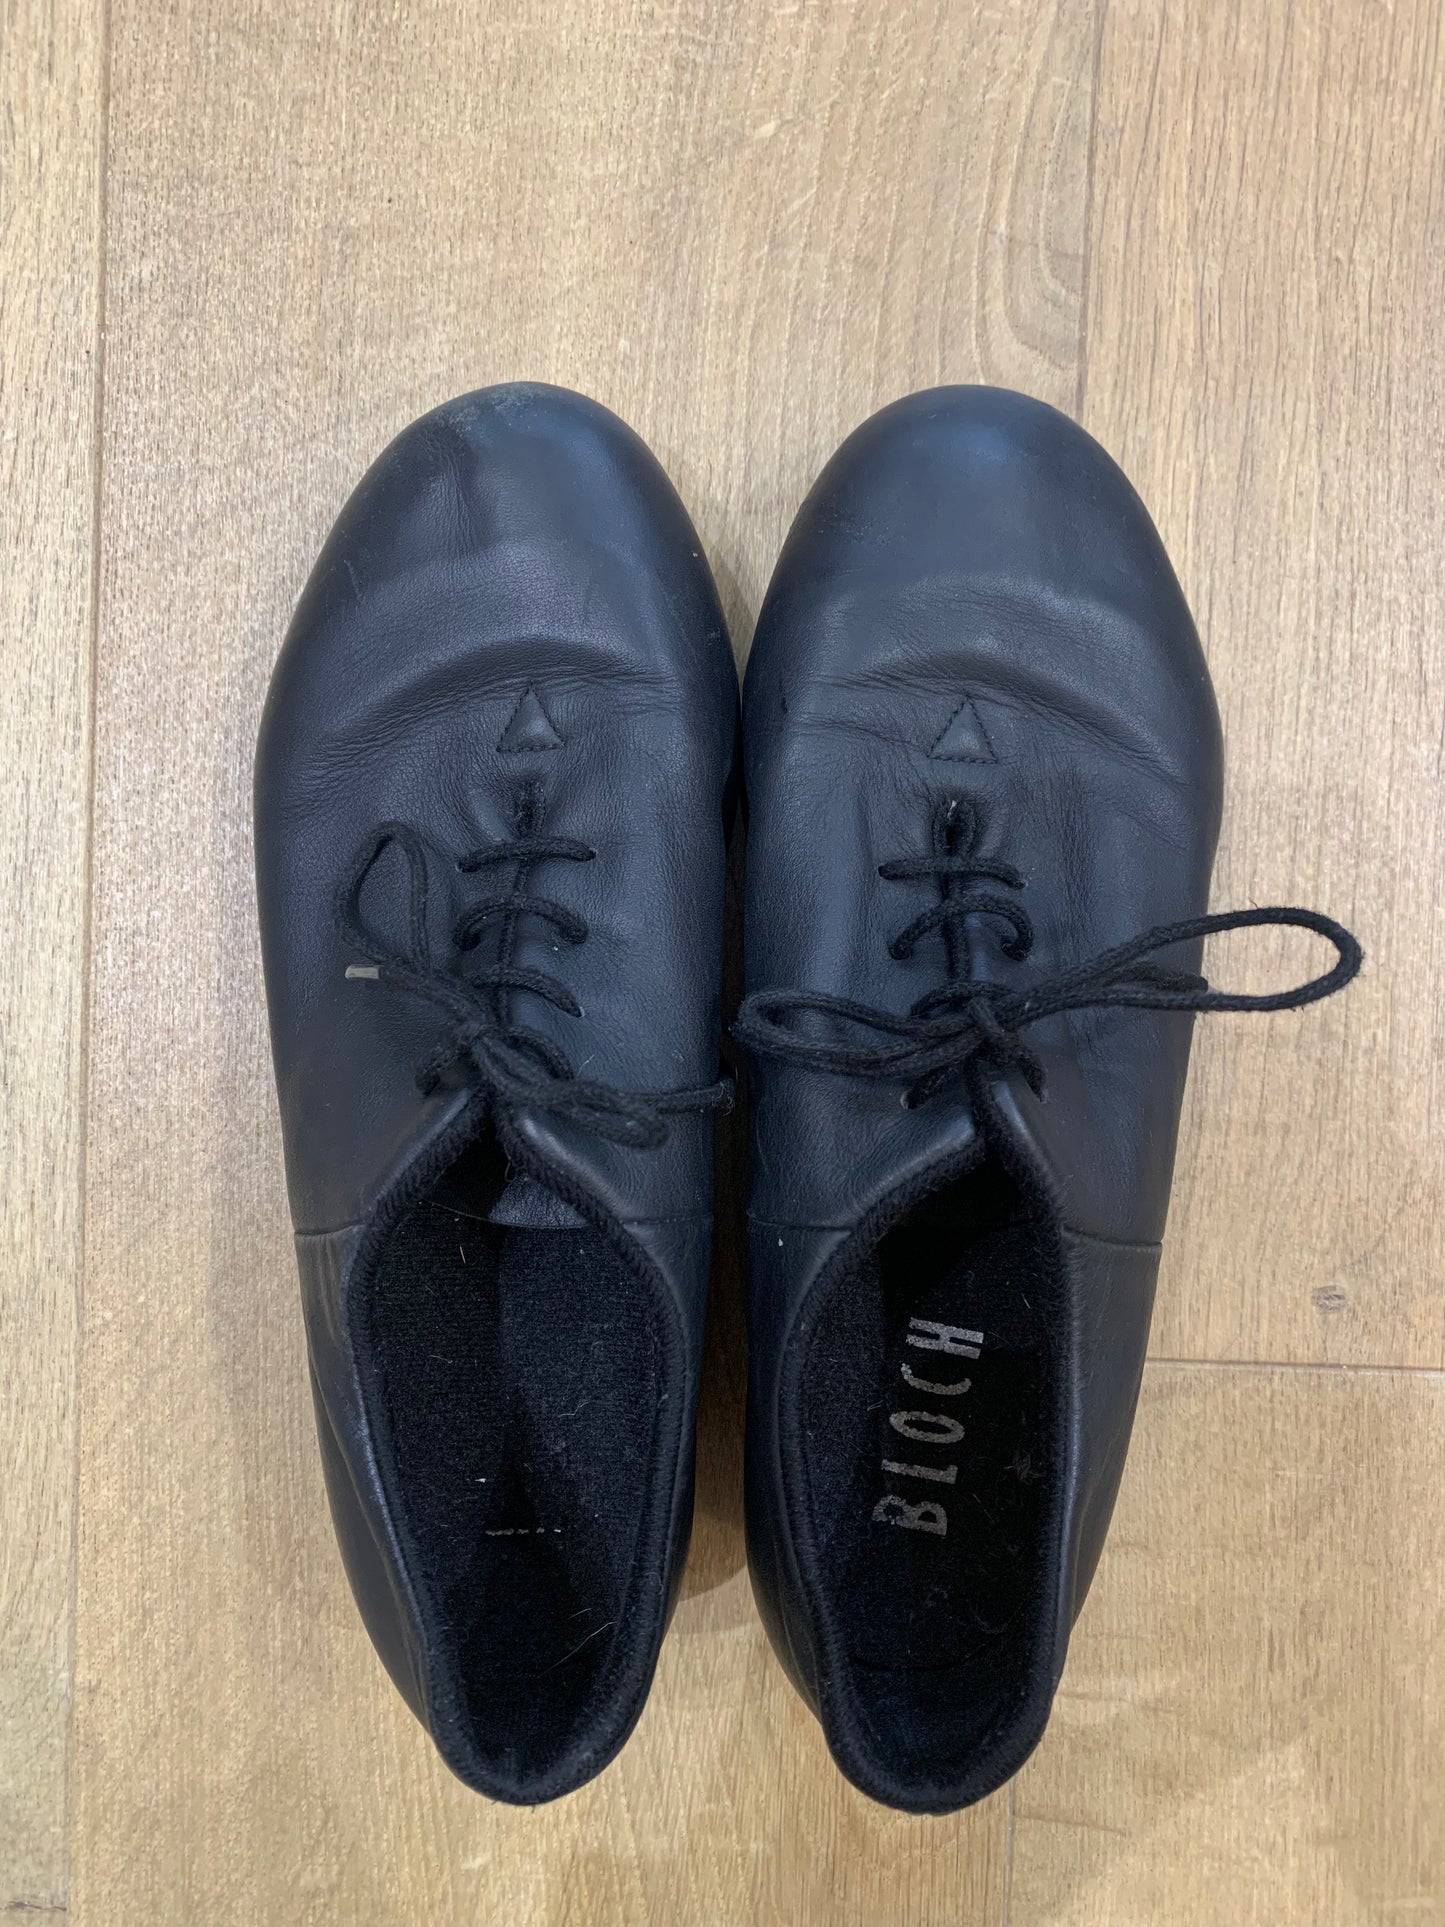 Bloch Sync Tap Shoes Black